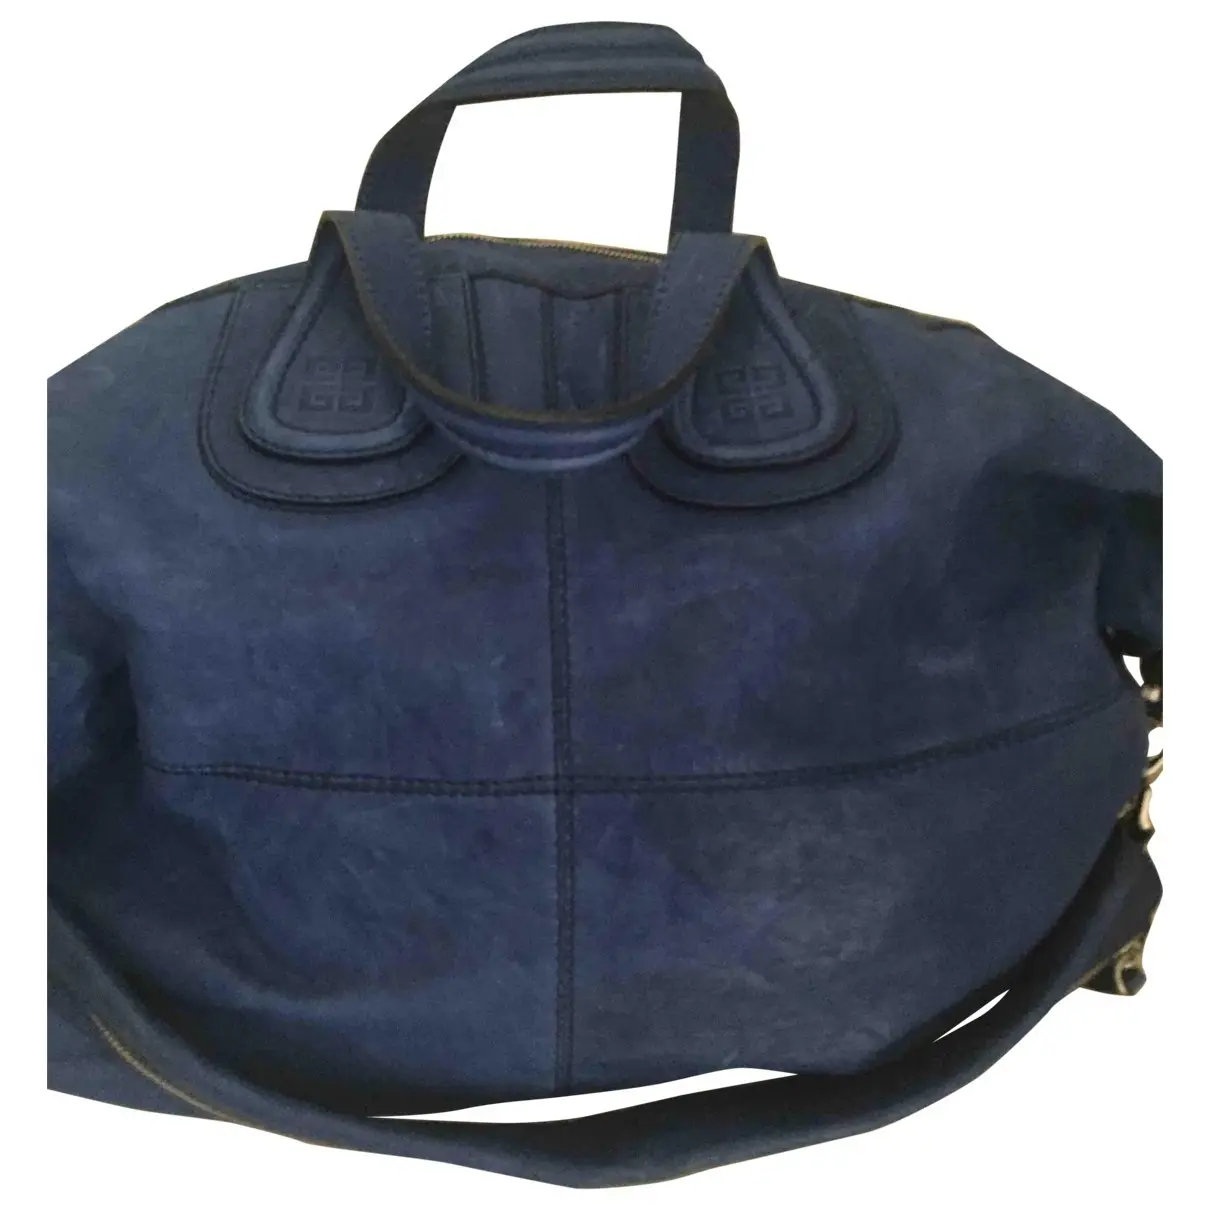 Givenchy Leather handbag for sale